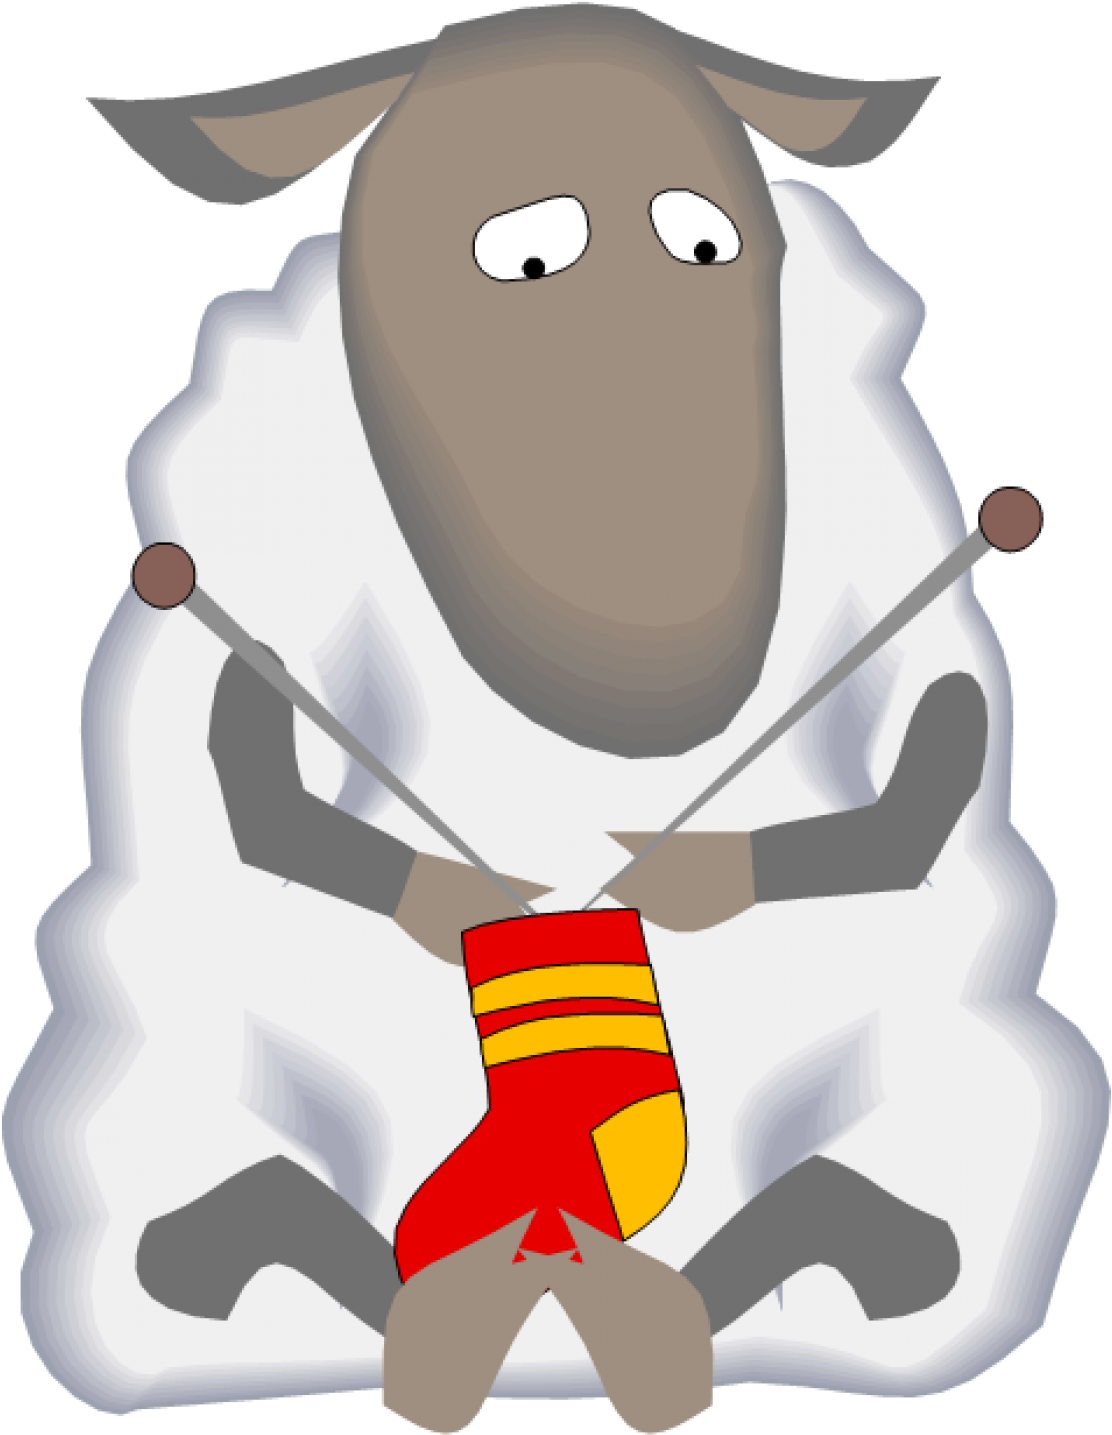 Knitting Sheep Cartoon Illustration